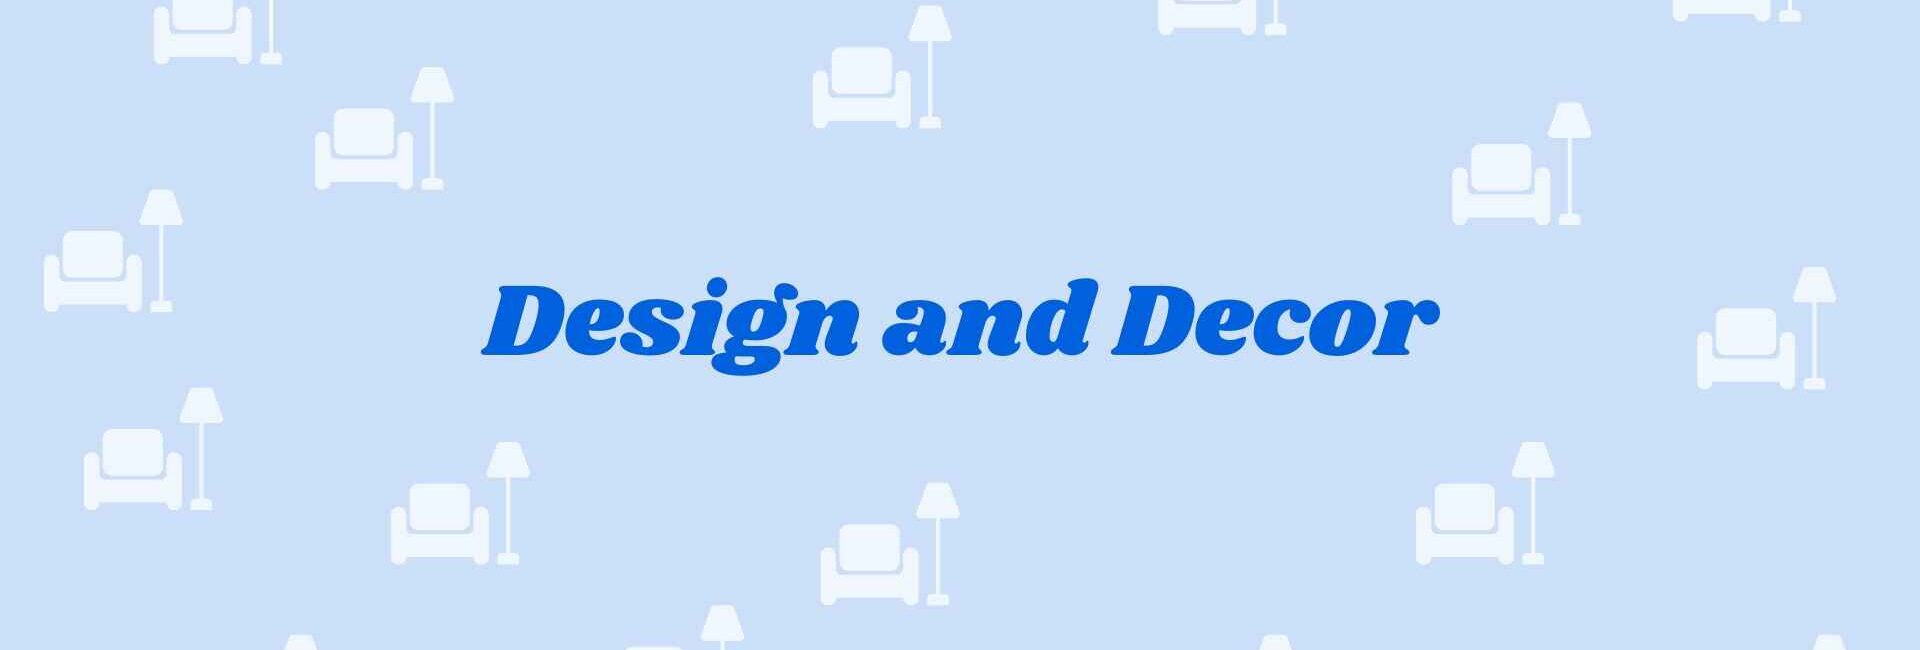 Design and Decor - home decor dealers in noida